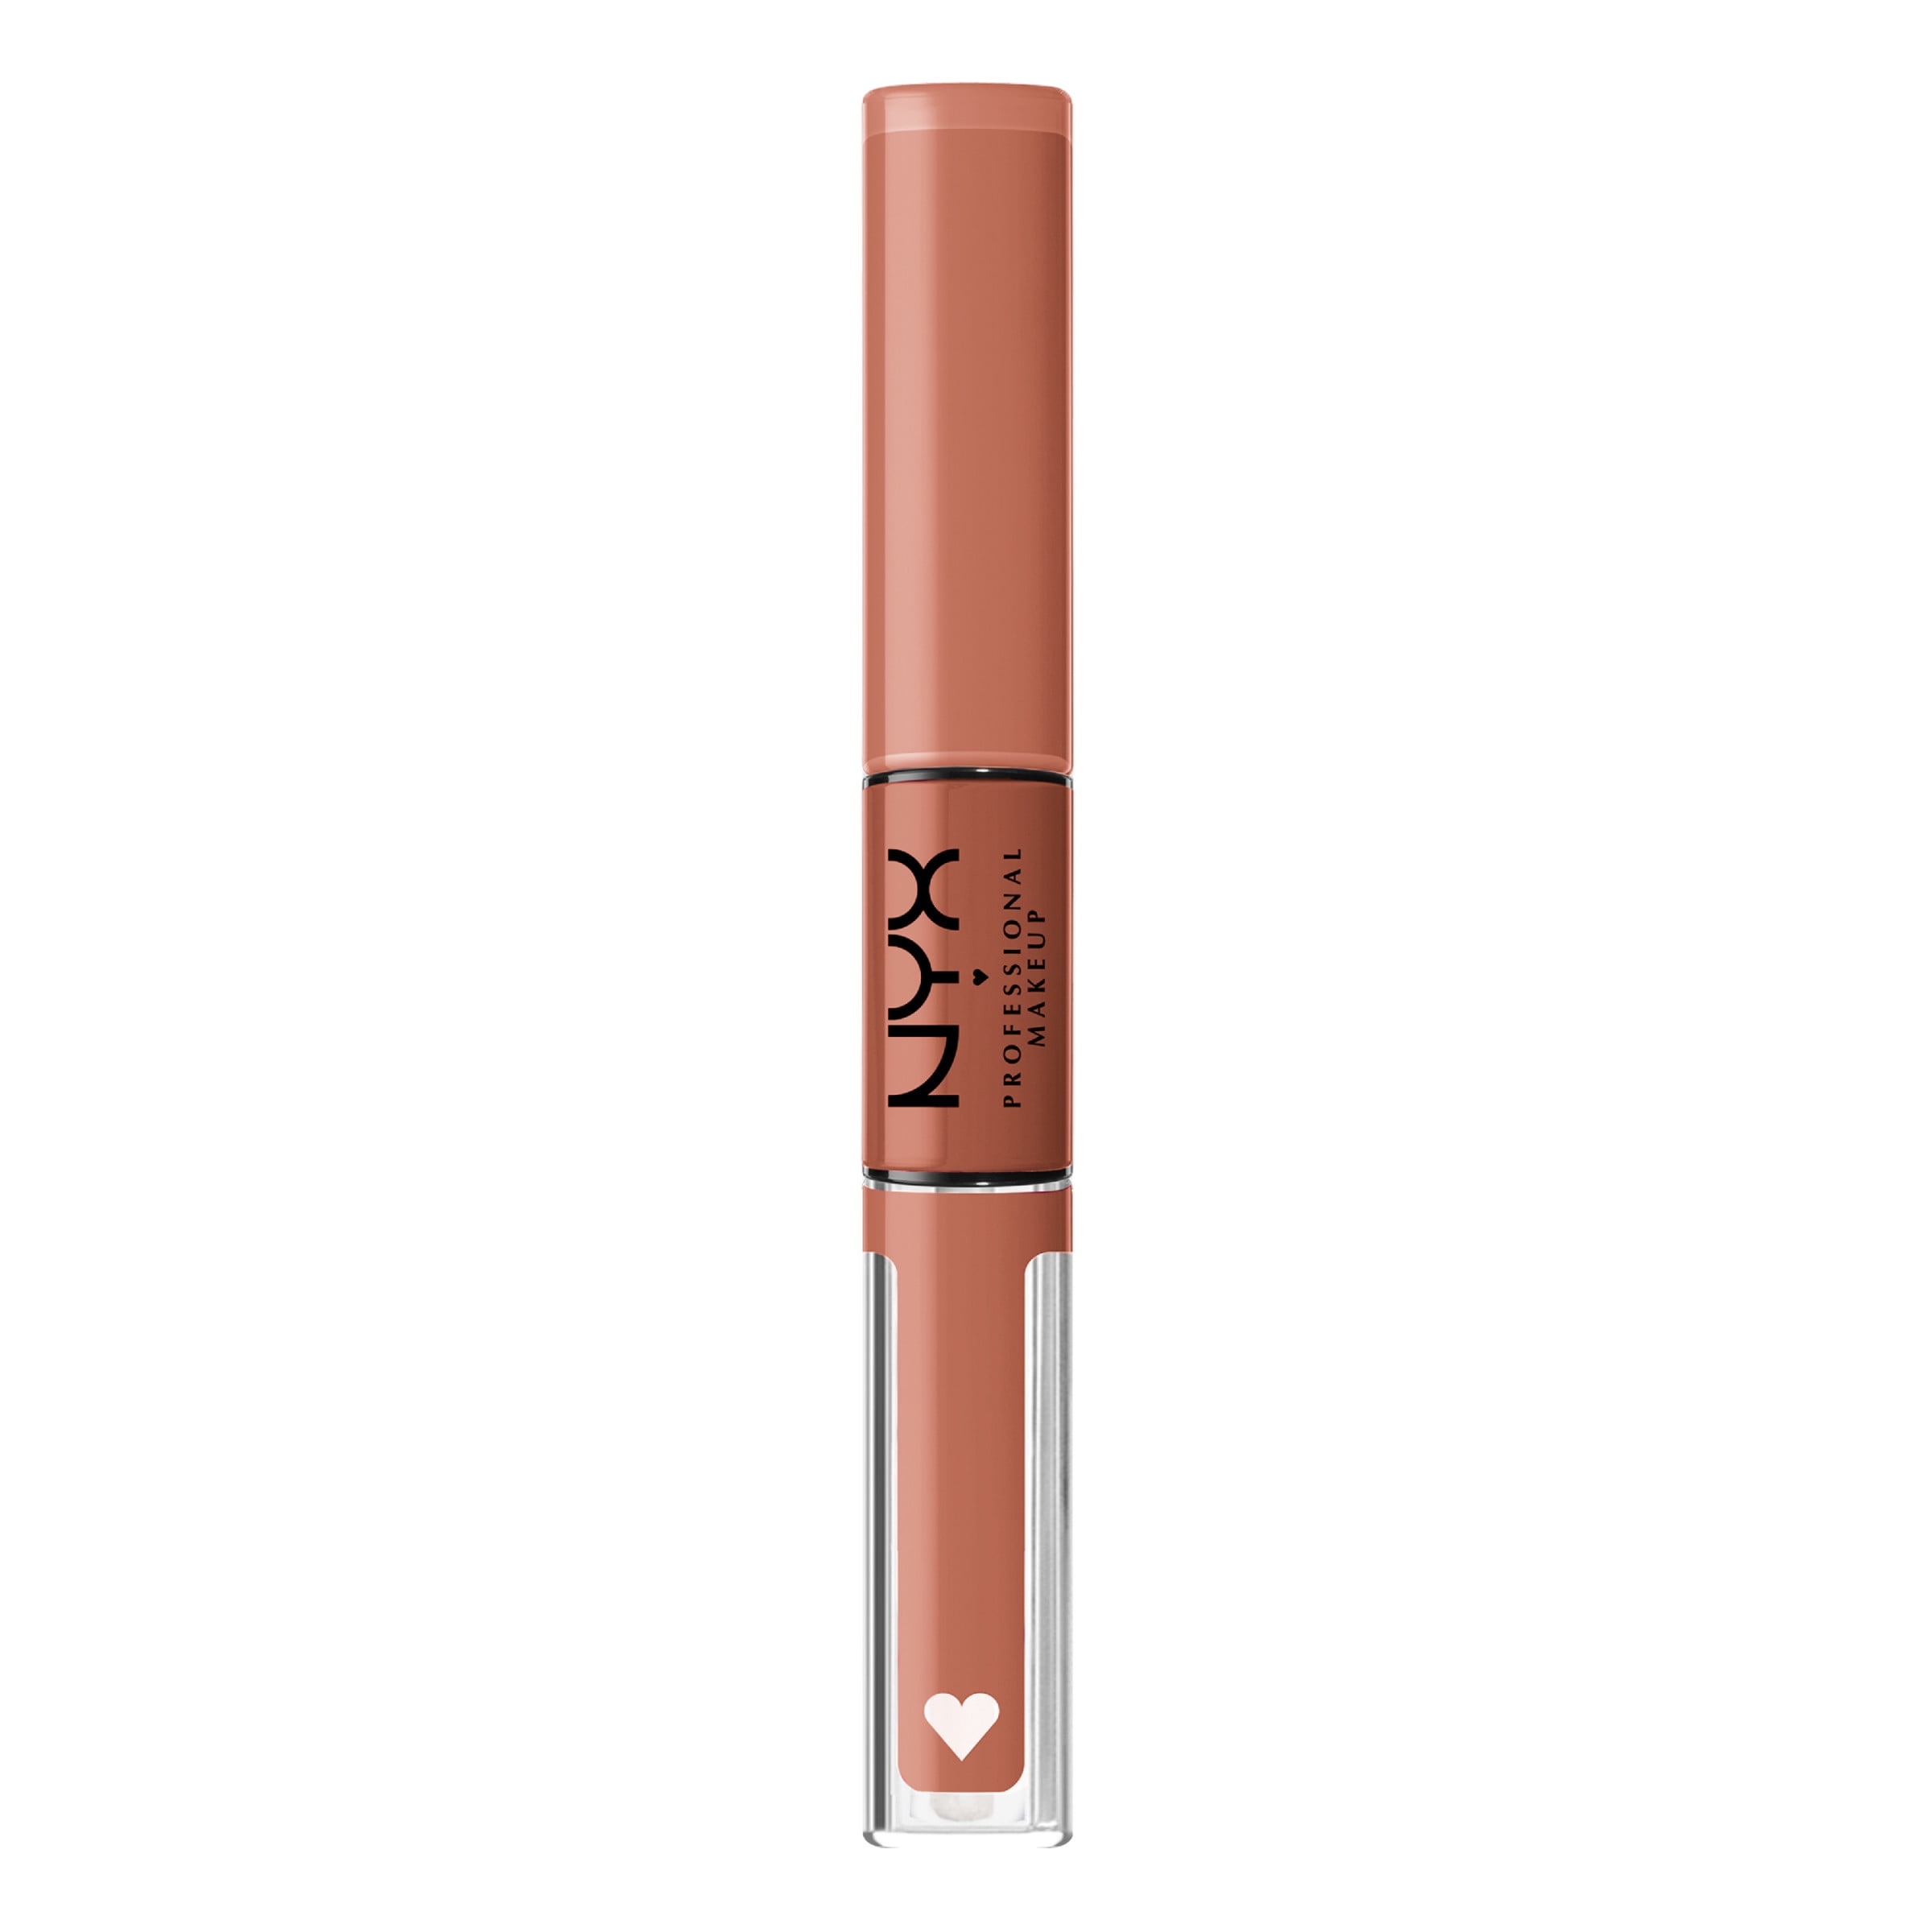 NYX Professional Makeup Long-Lasting Shine High Liquid Boundary Vegan Pusher Loud Lipstick, Shine